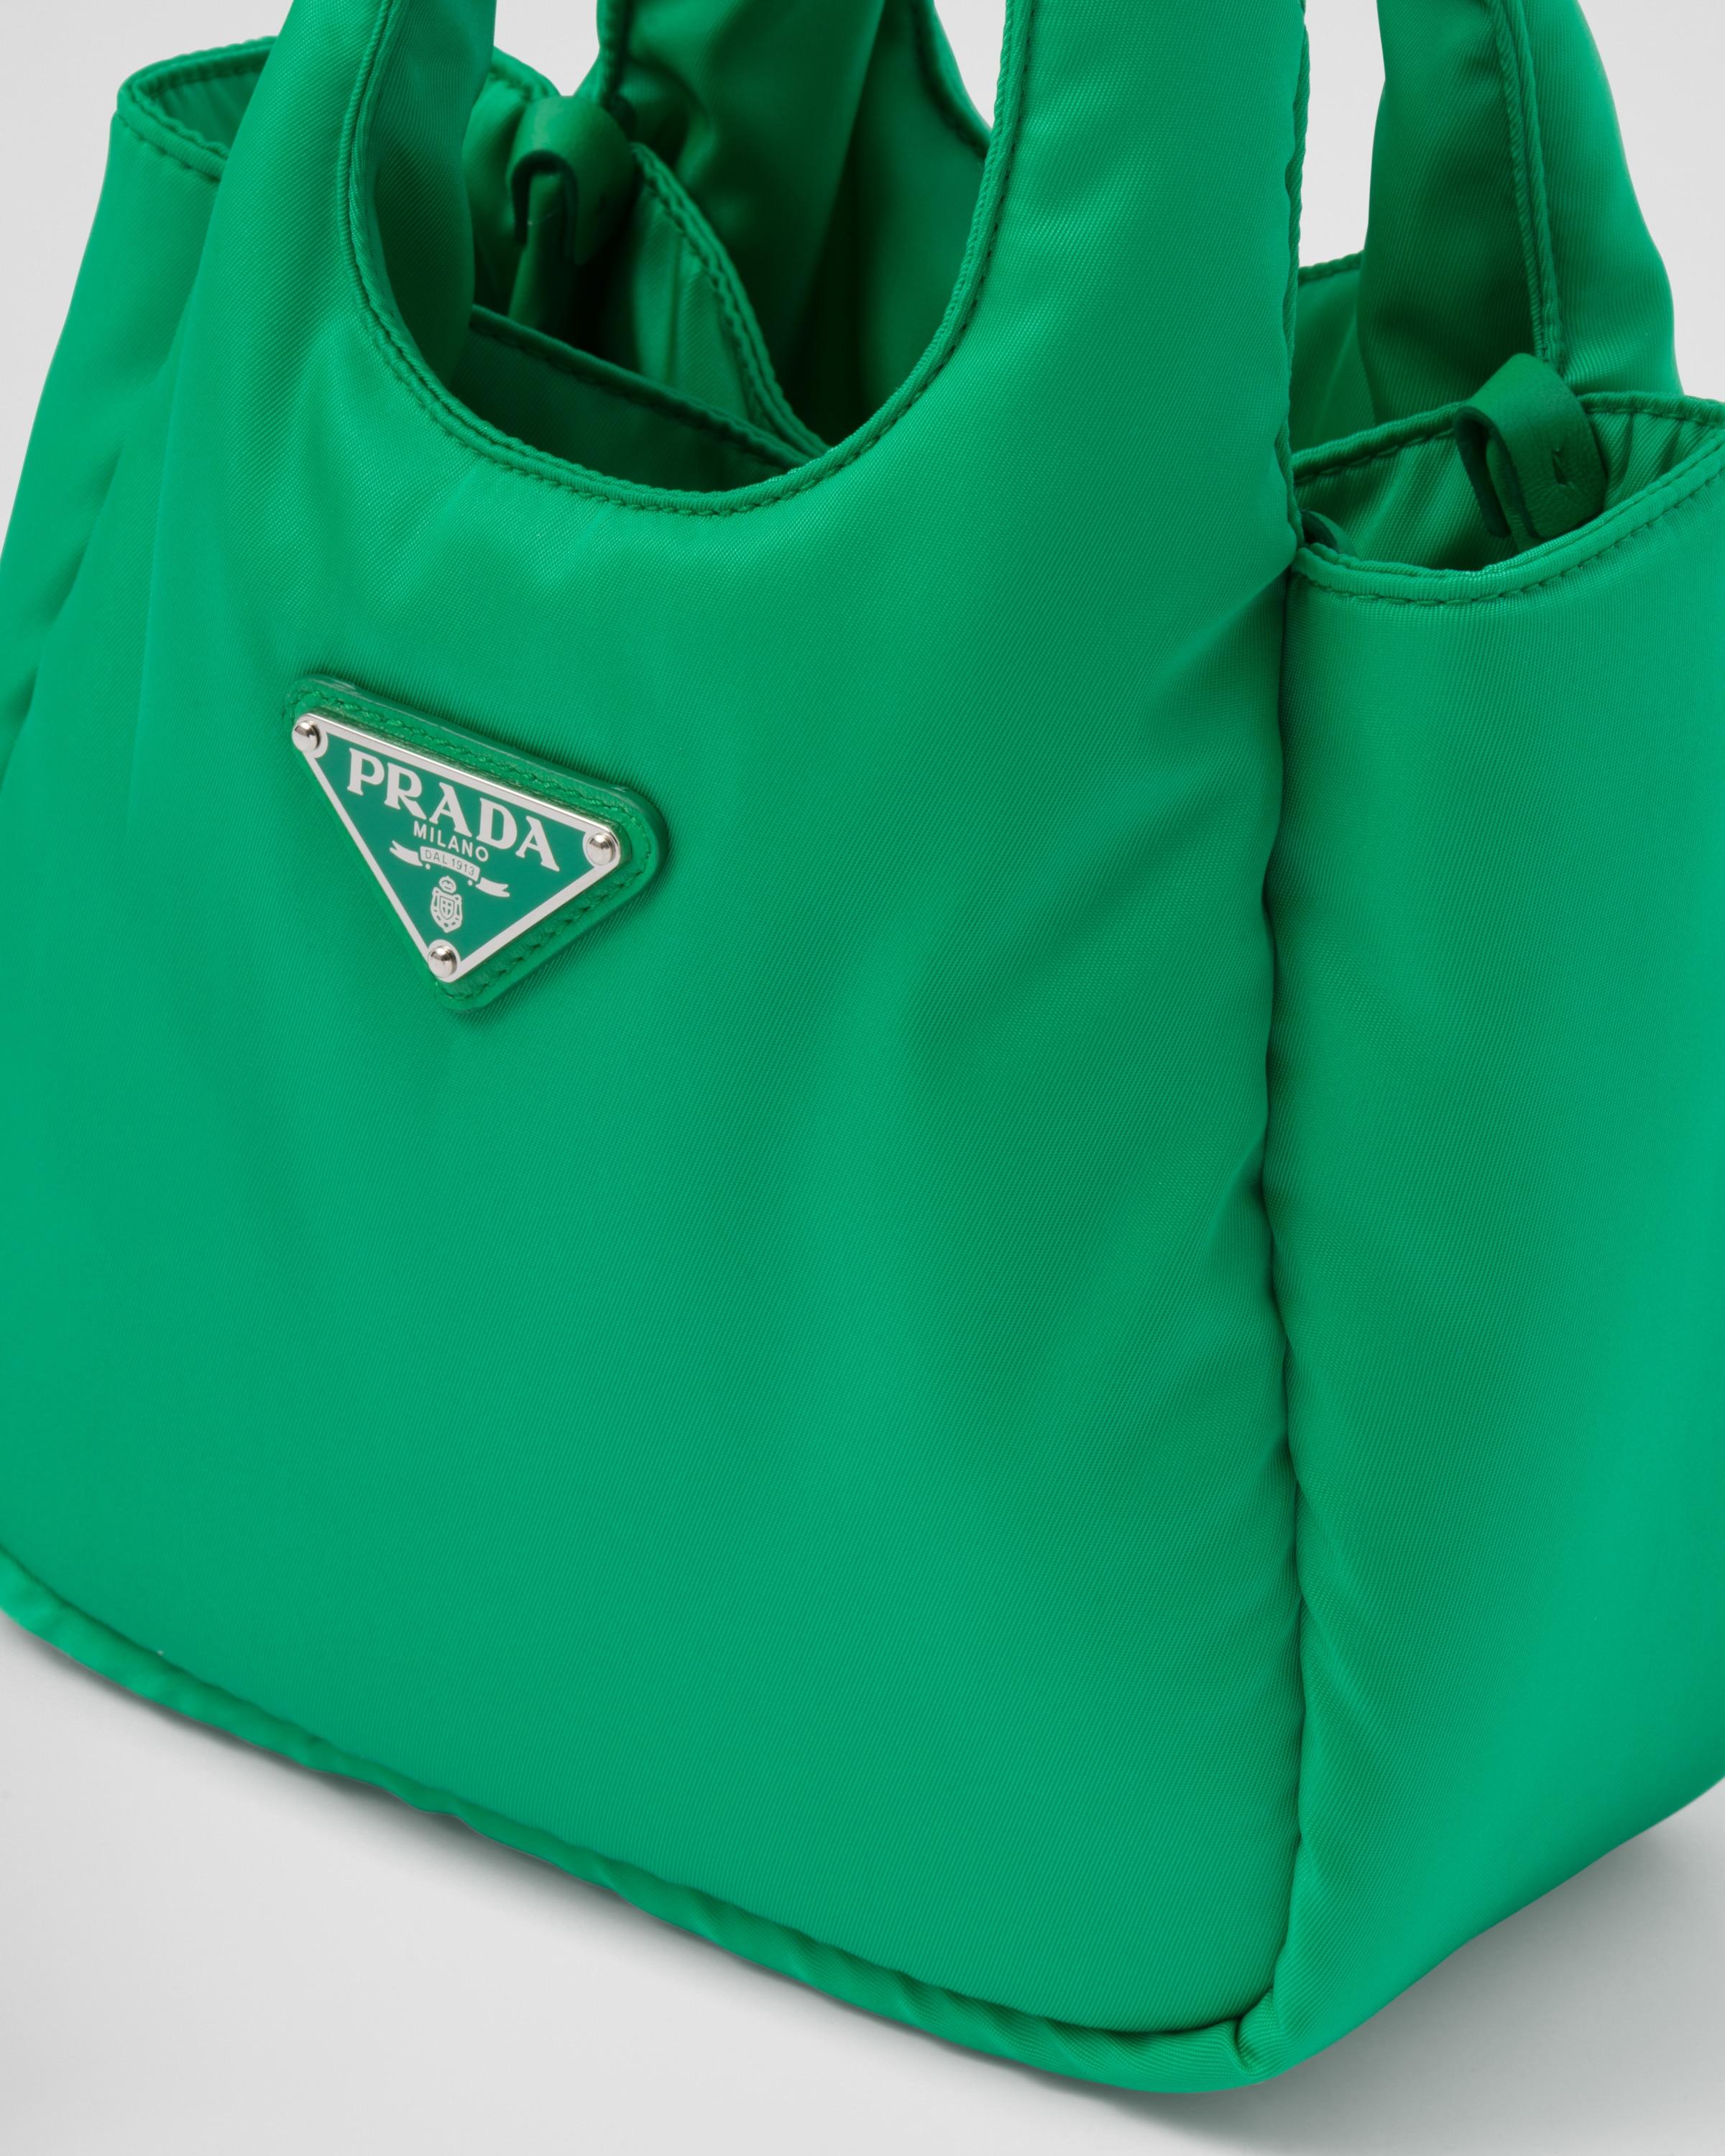 Prada Re-Edition 2000 Nylon Bag Mini Mint Green in Nylon with